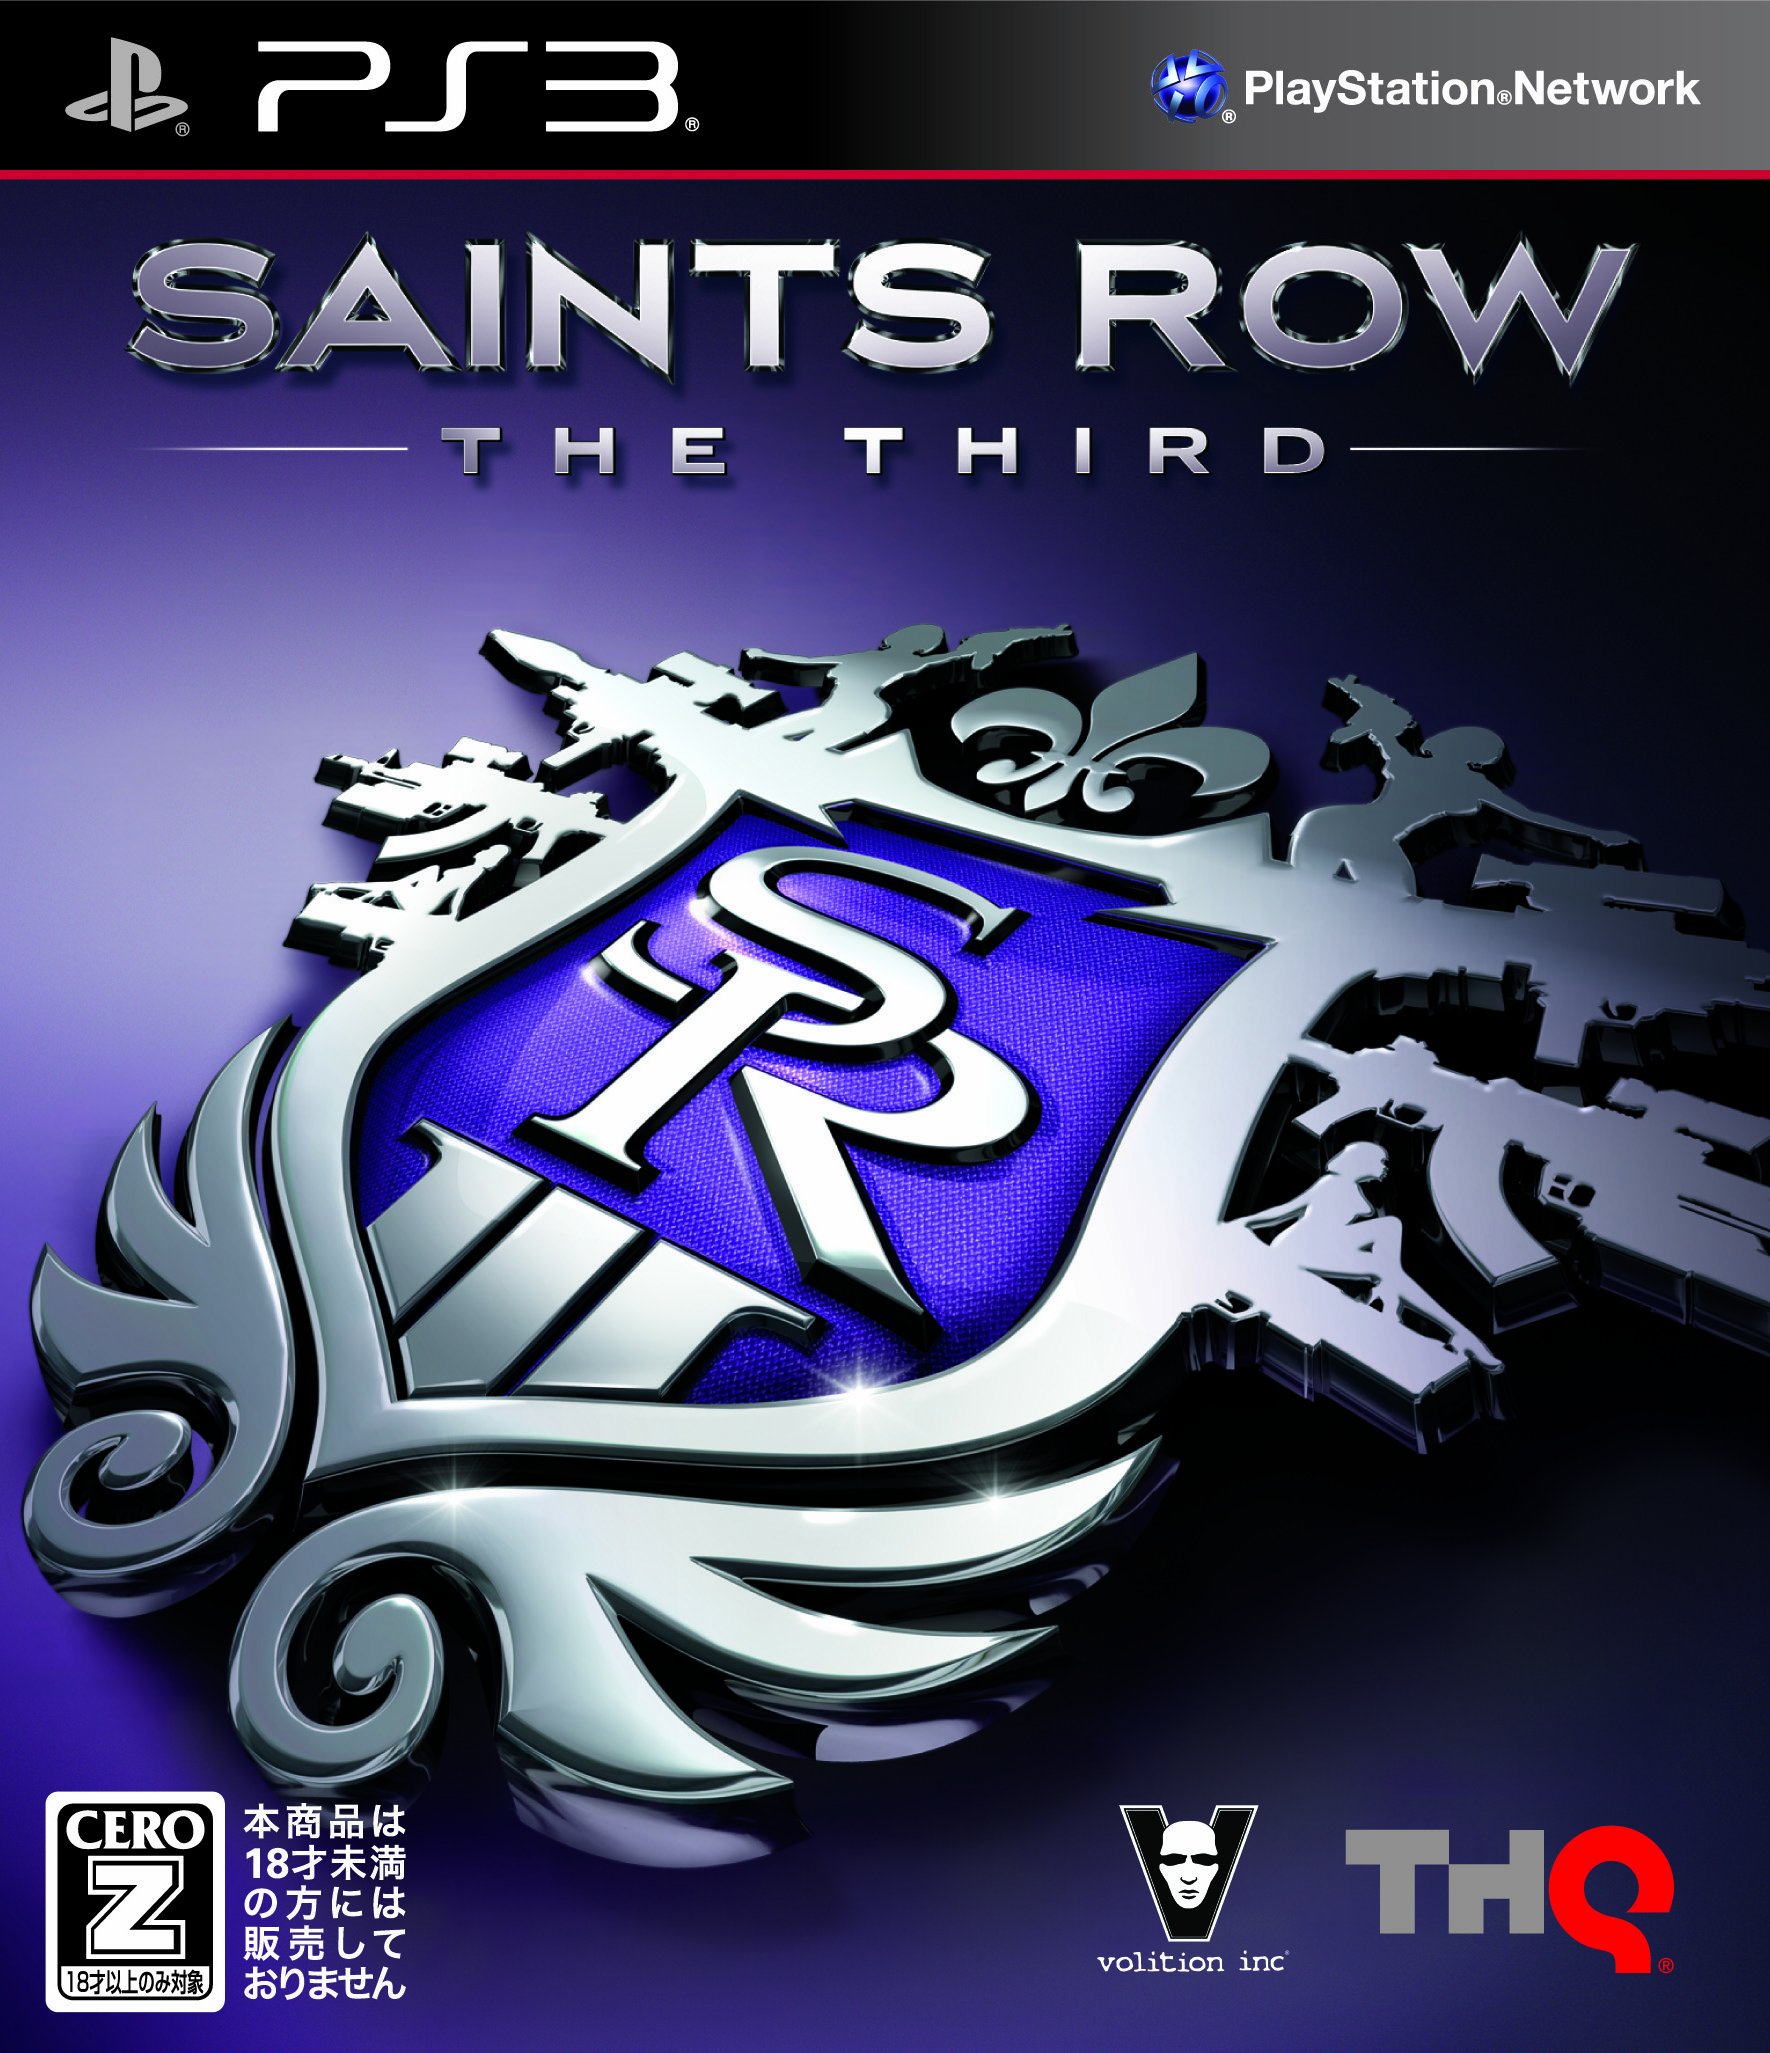 Saints Row: The Third [Japan Import]